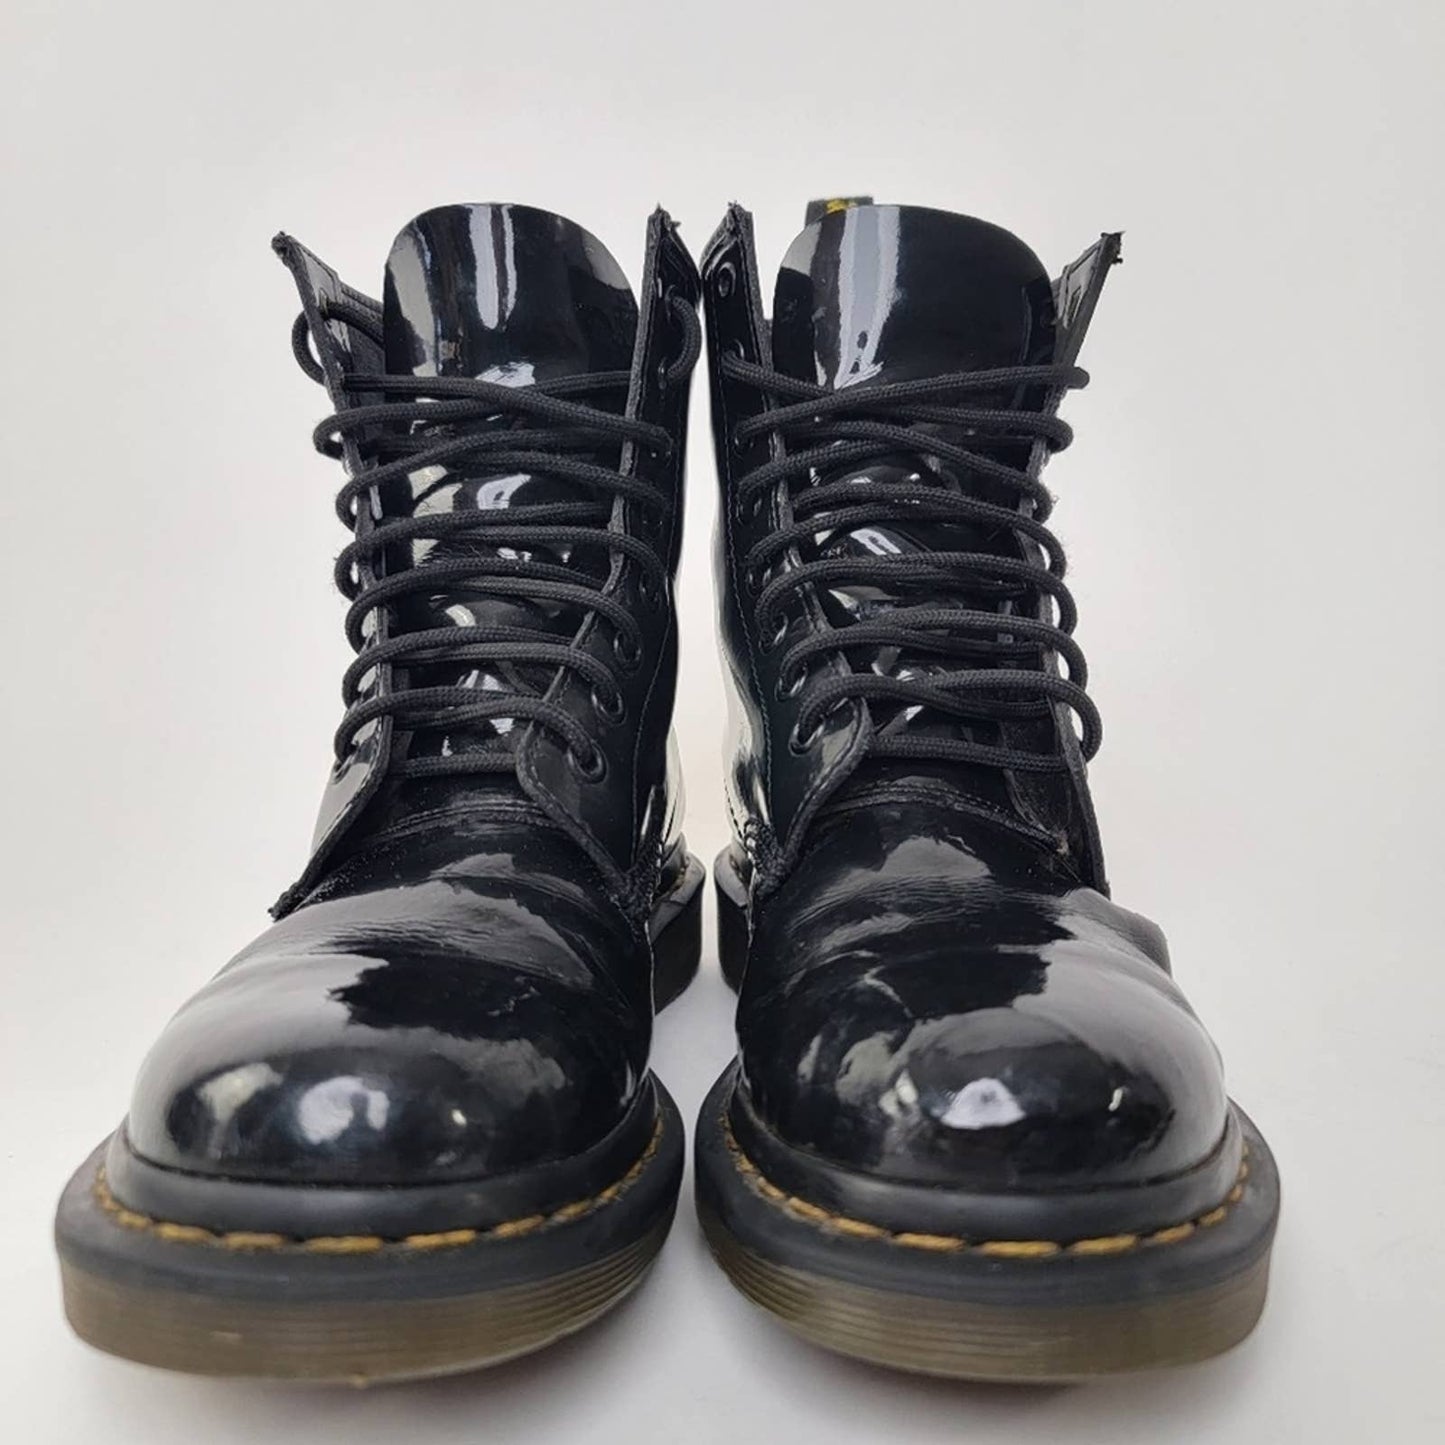 Dr. Martens 1460 Patent Leather Black Boots - 8